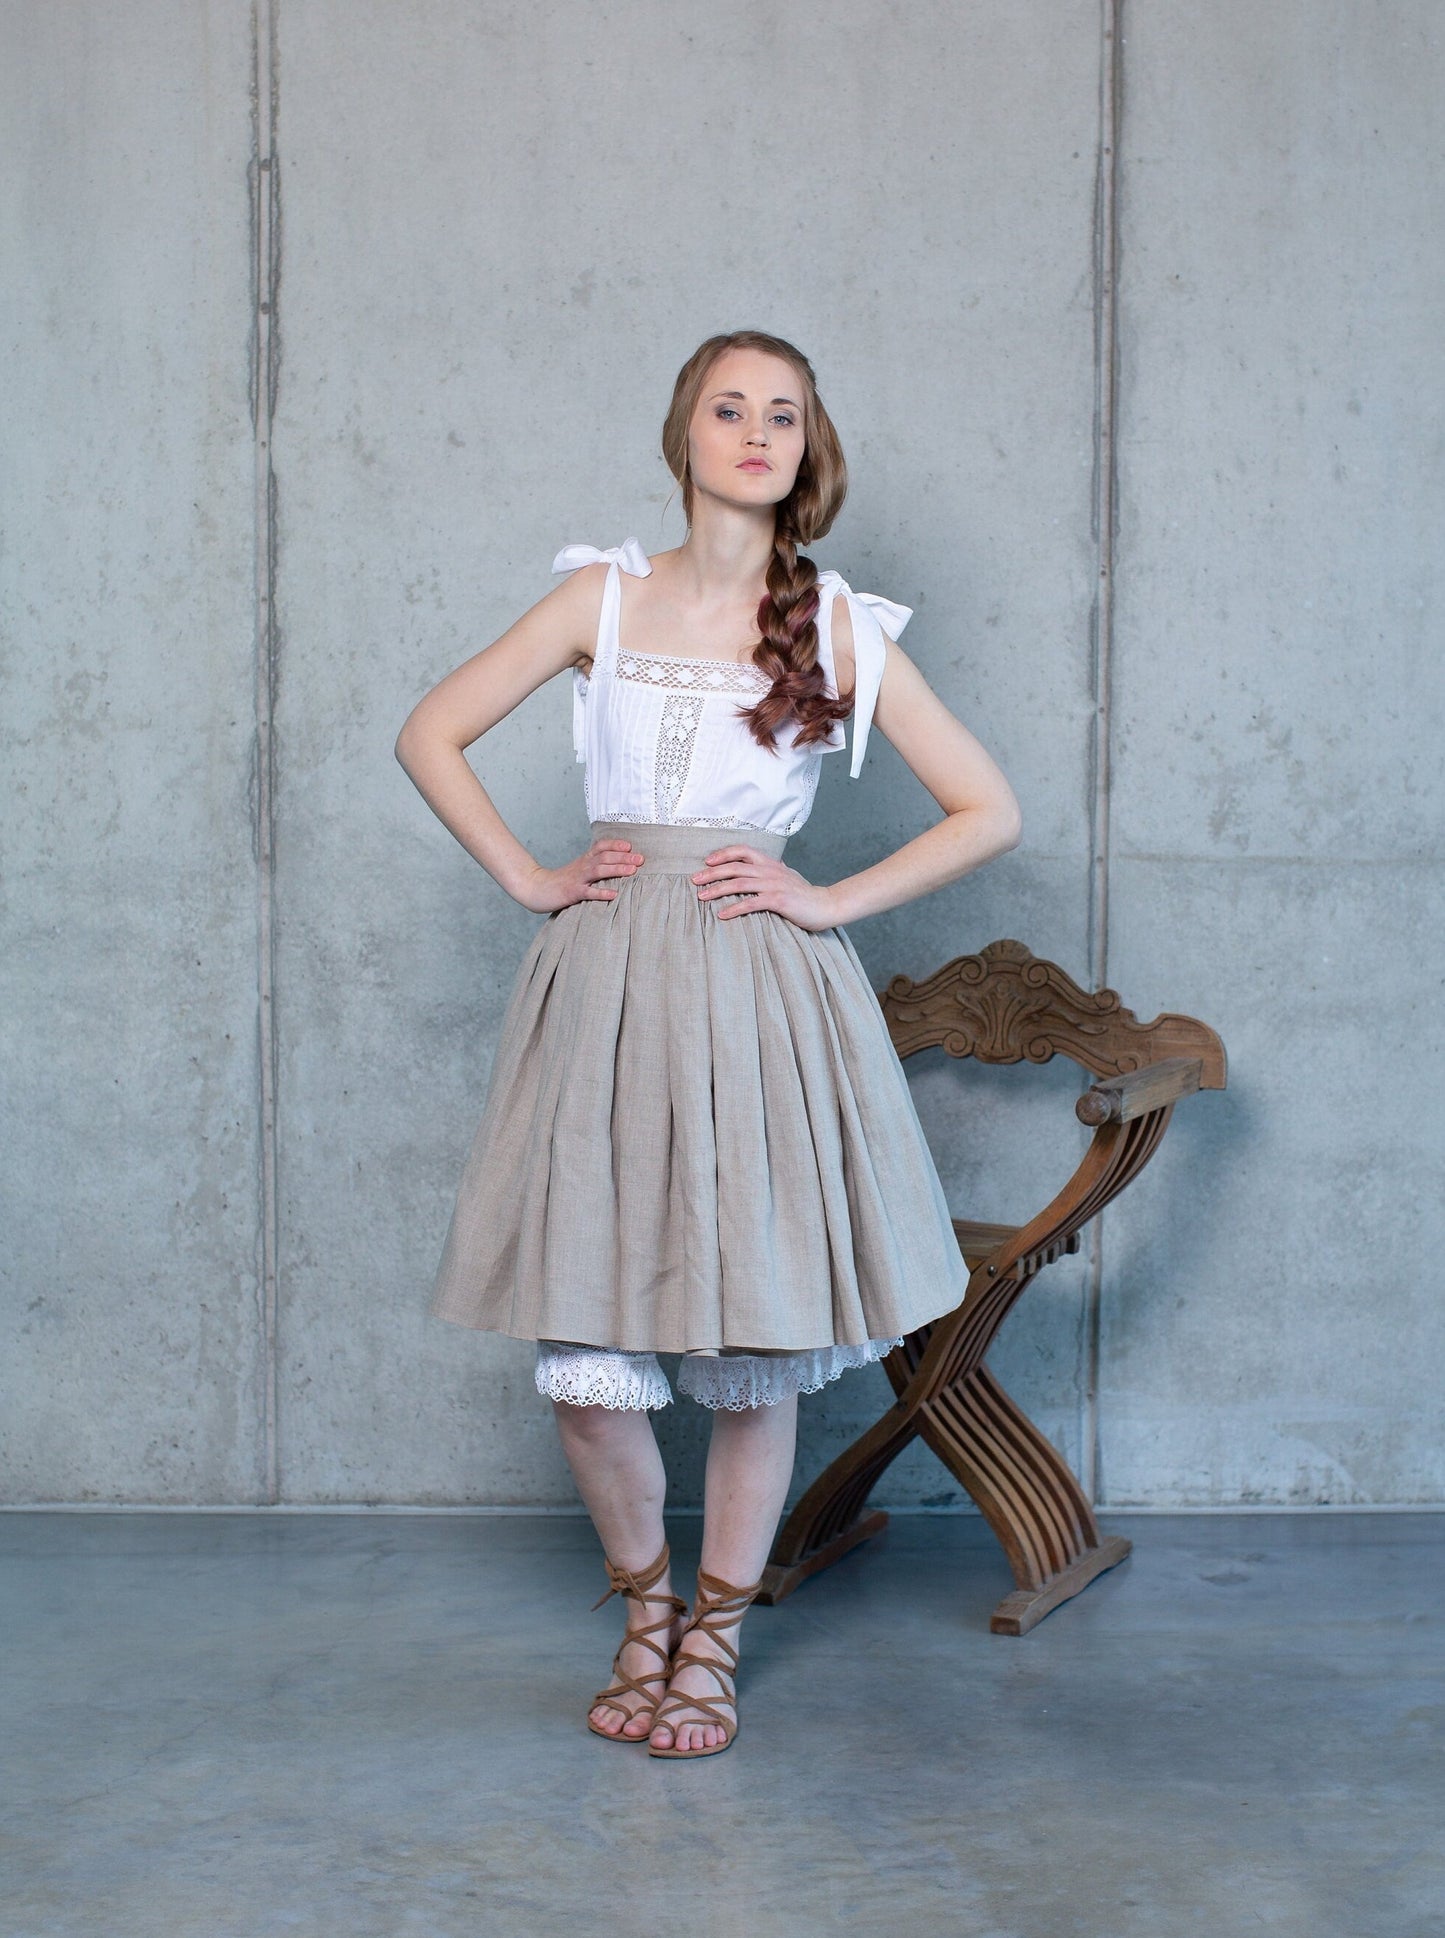 Gretel with an Attitude - Skirt and Victorian Inspired Underwear Set